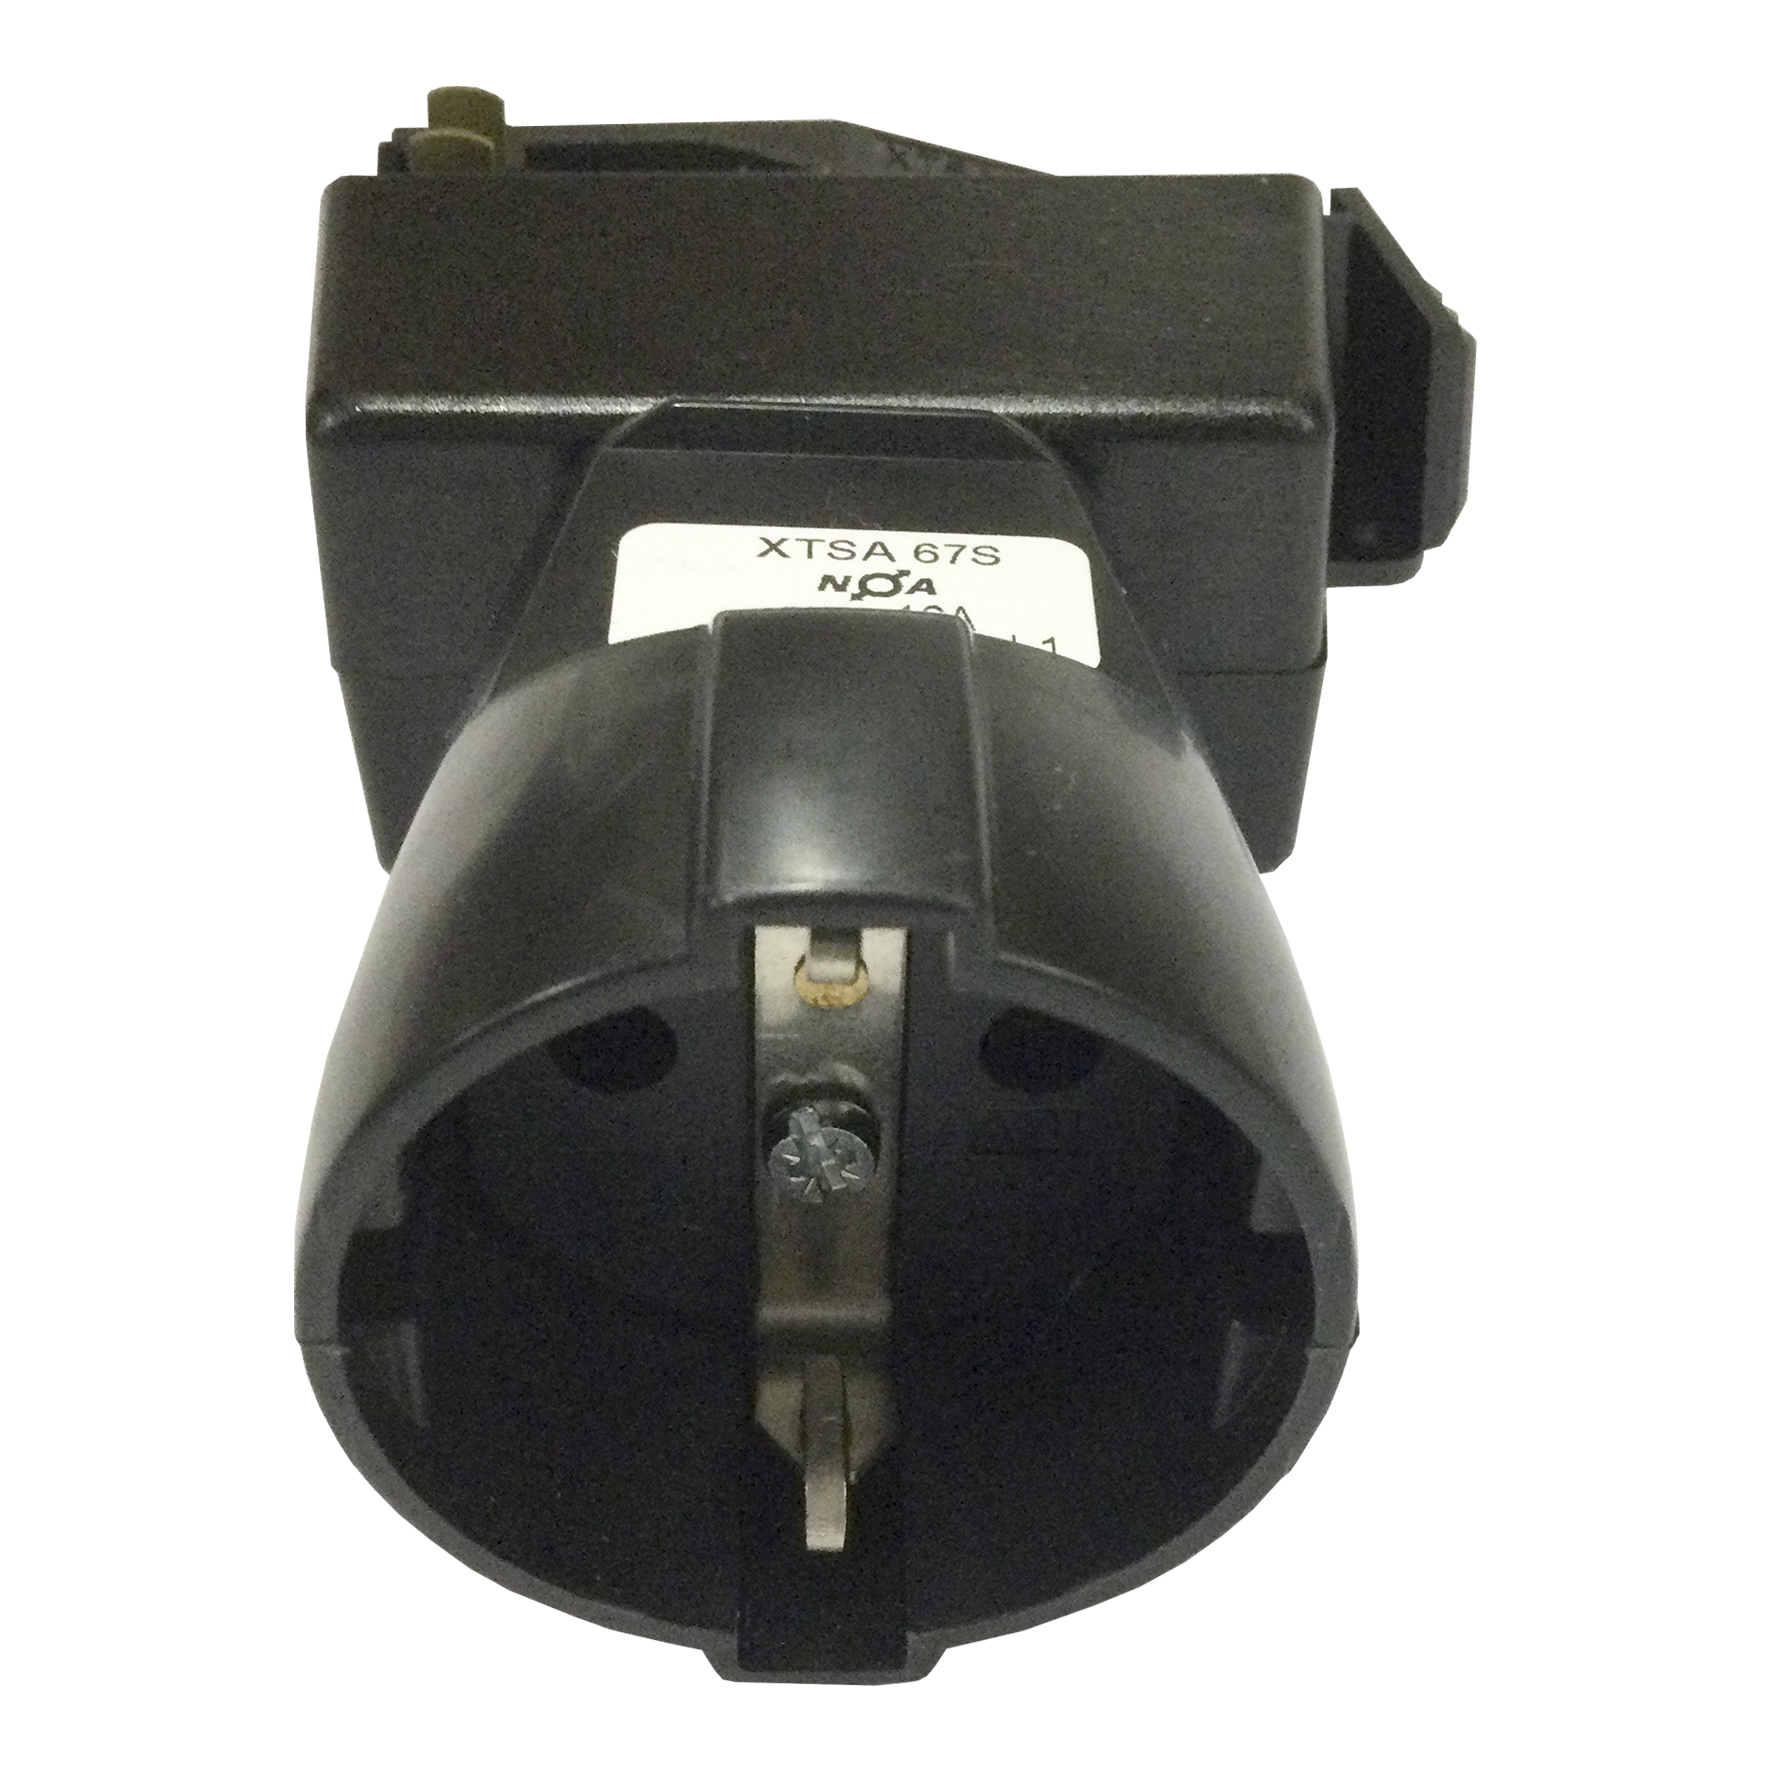 XTSA 67S-2 Schuko Adapter Black 3-Circuit